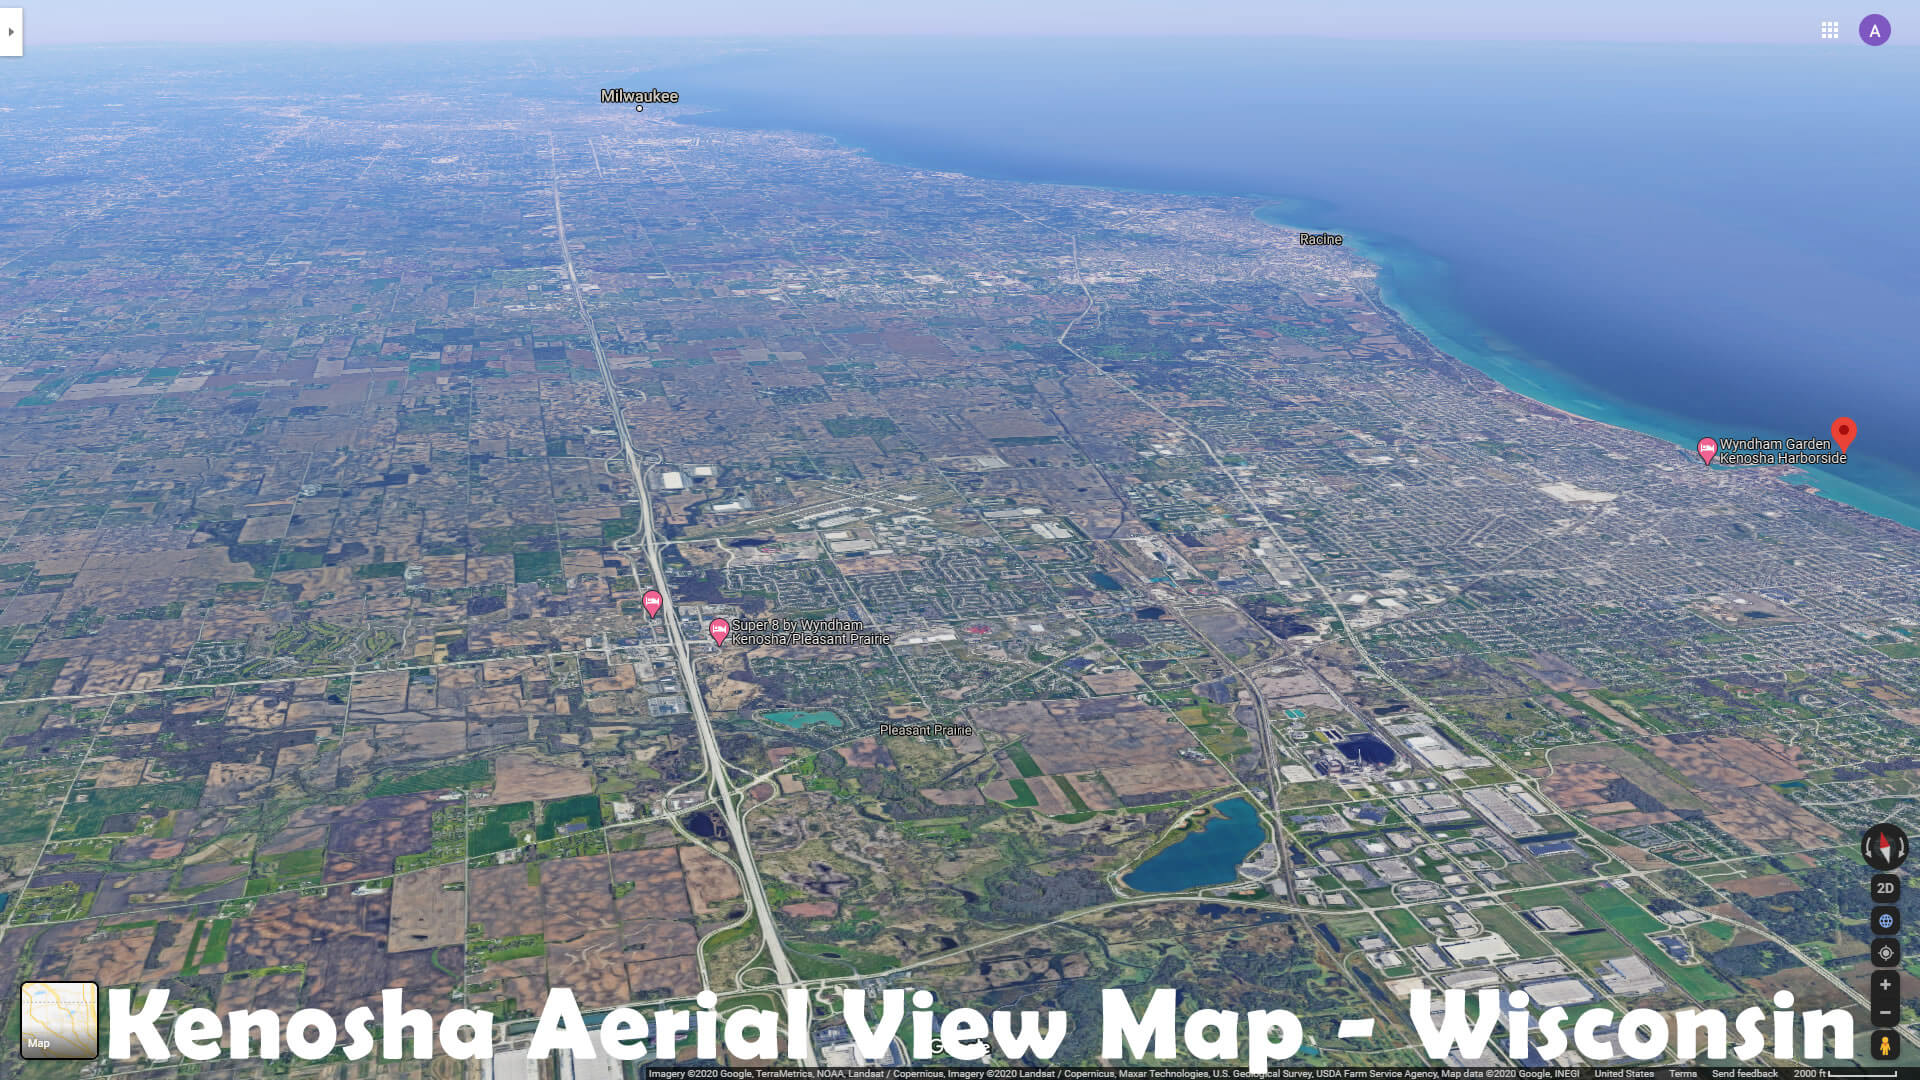 Kenosha Aerial View Map - Wisconsin